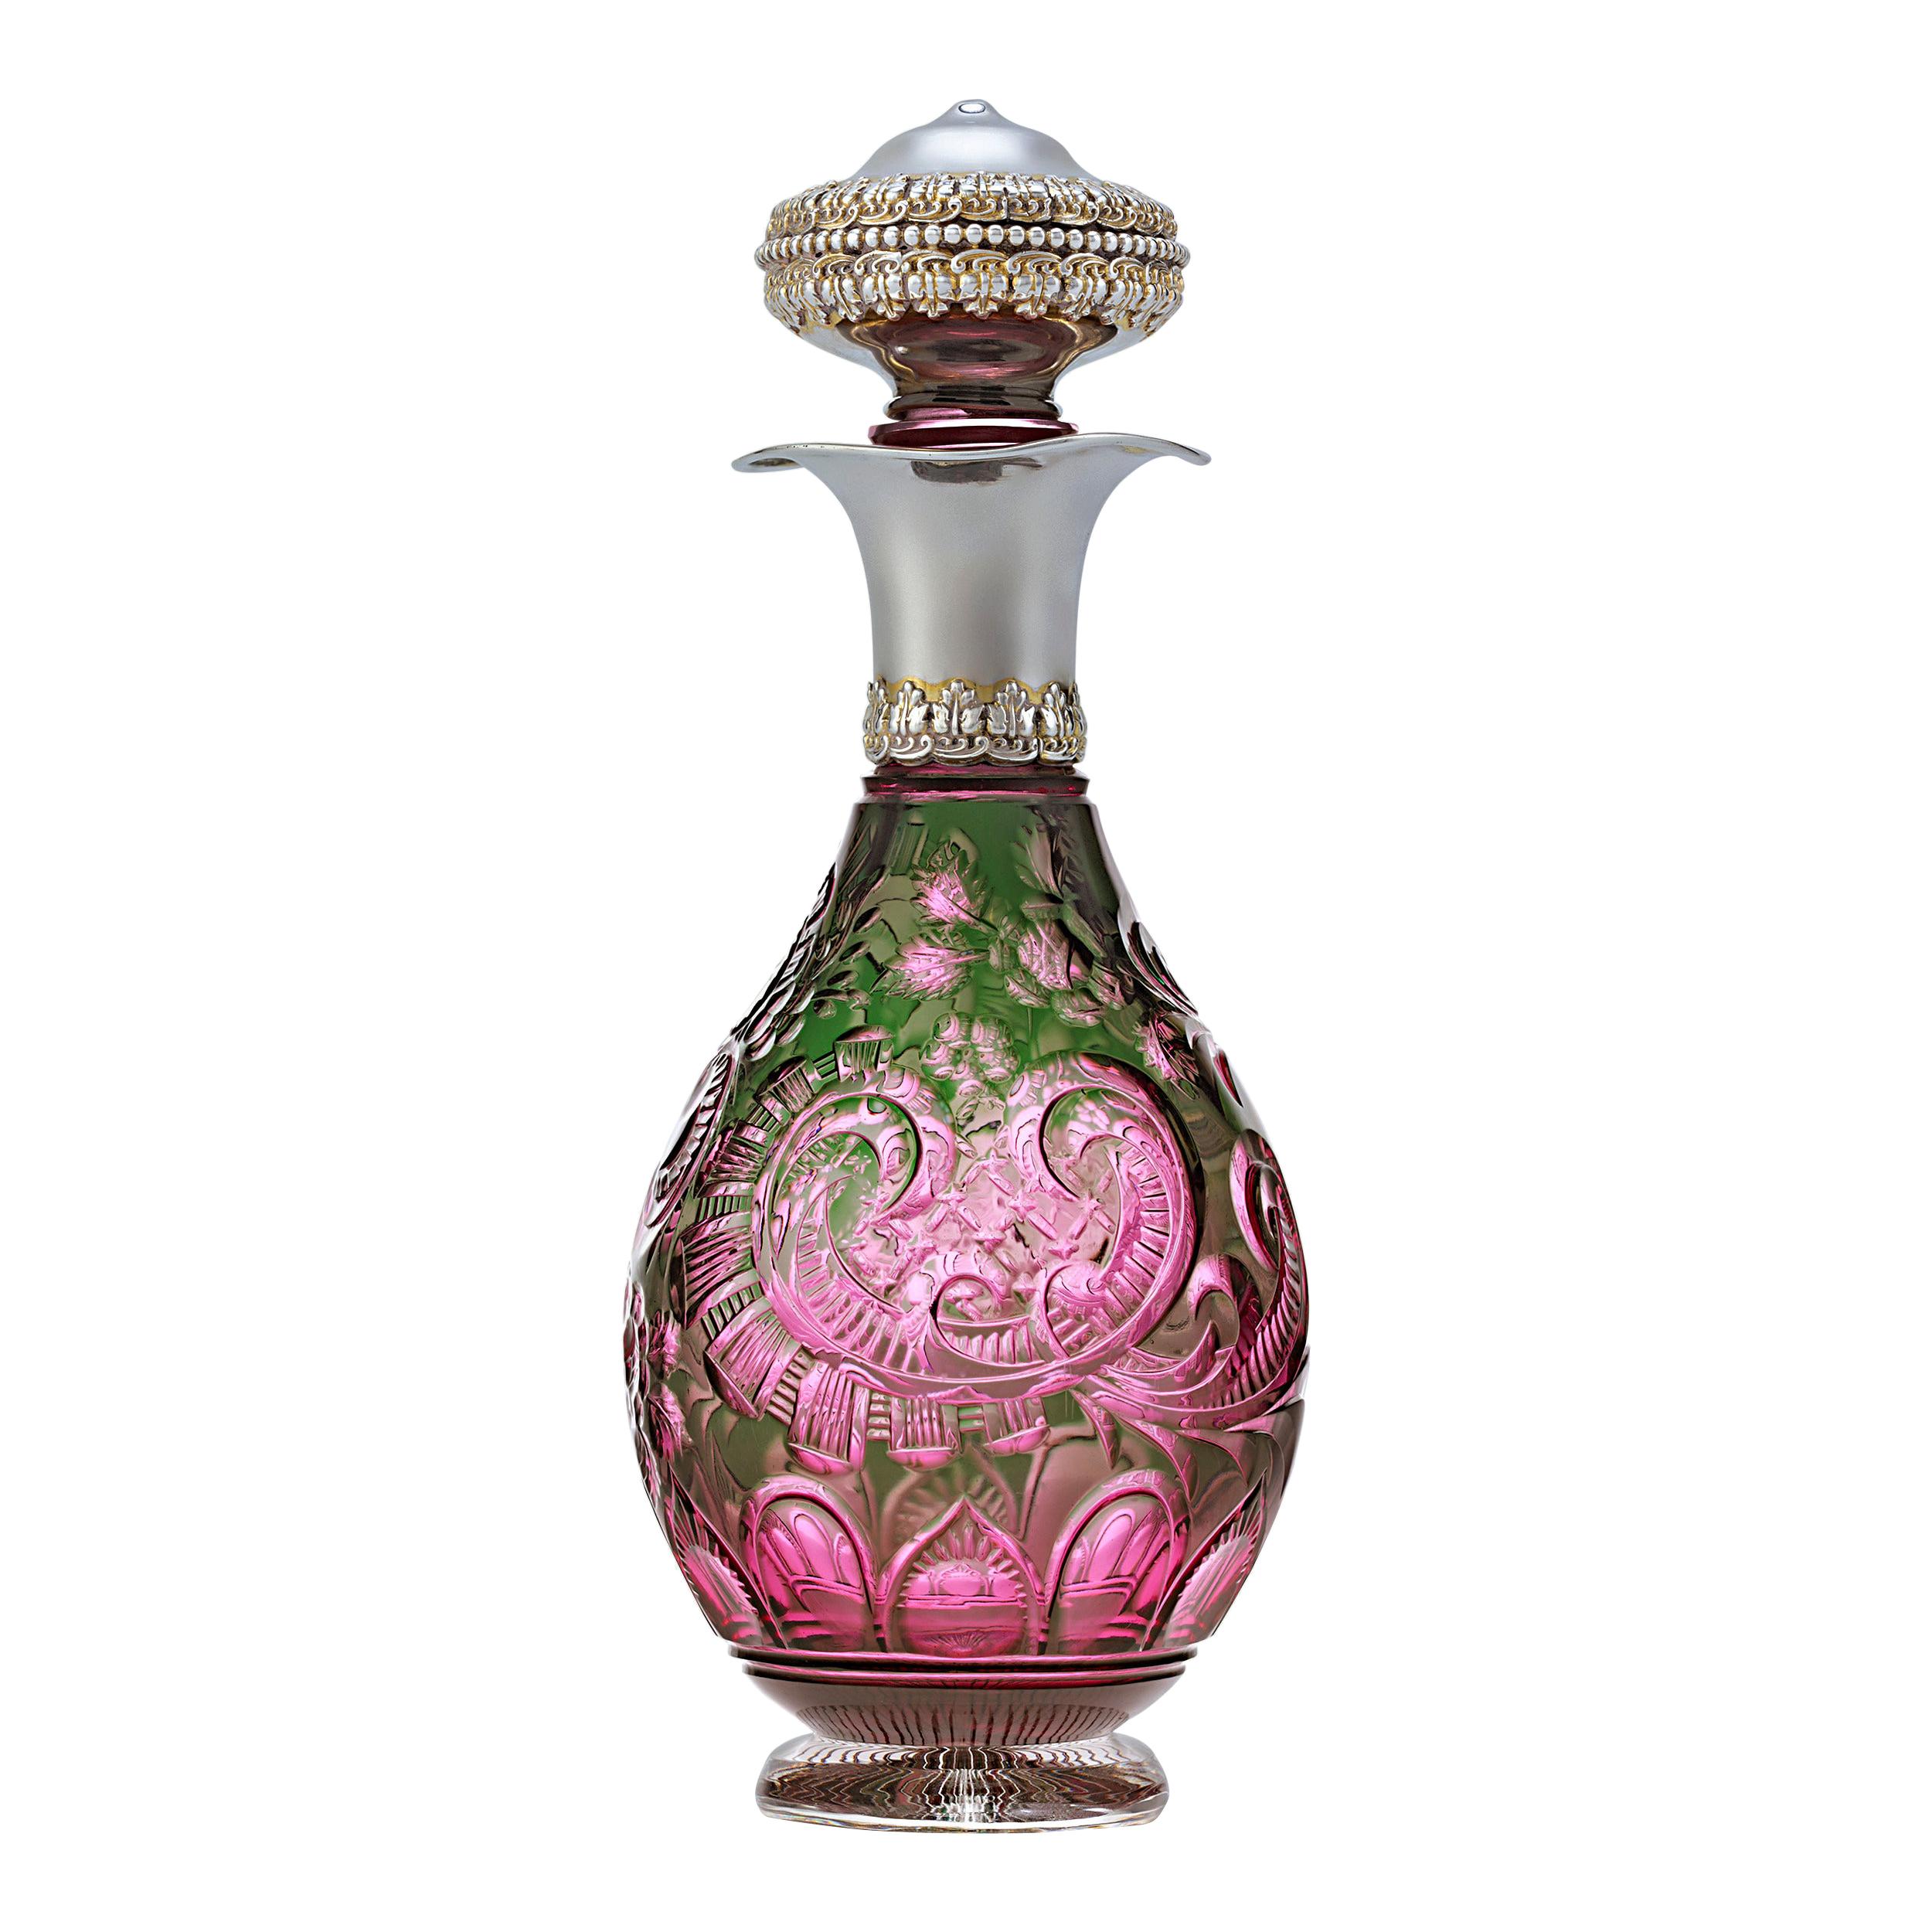 Intaglio Glass Perfume by Stevens & Williams